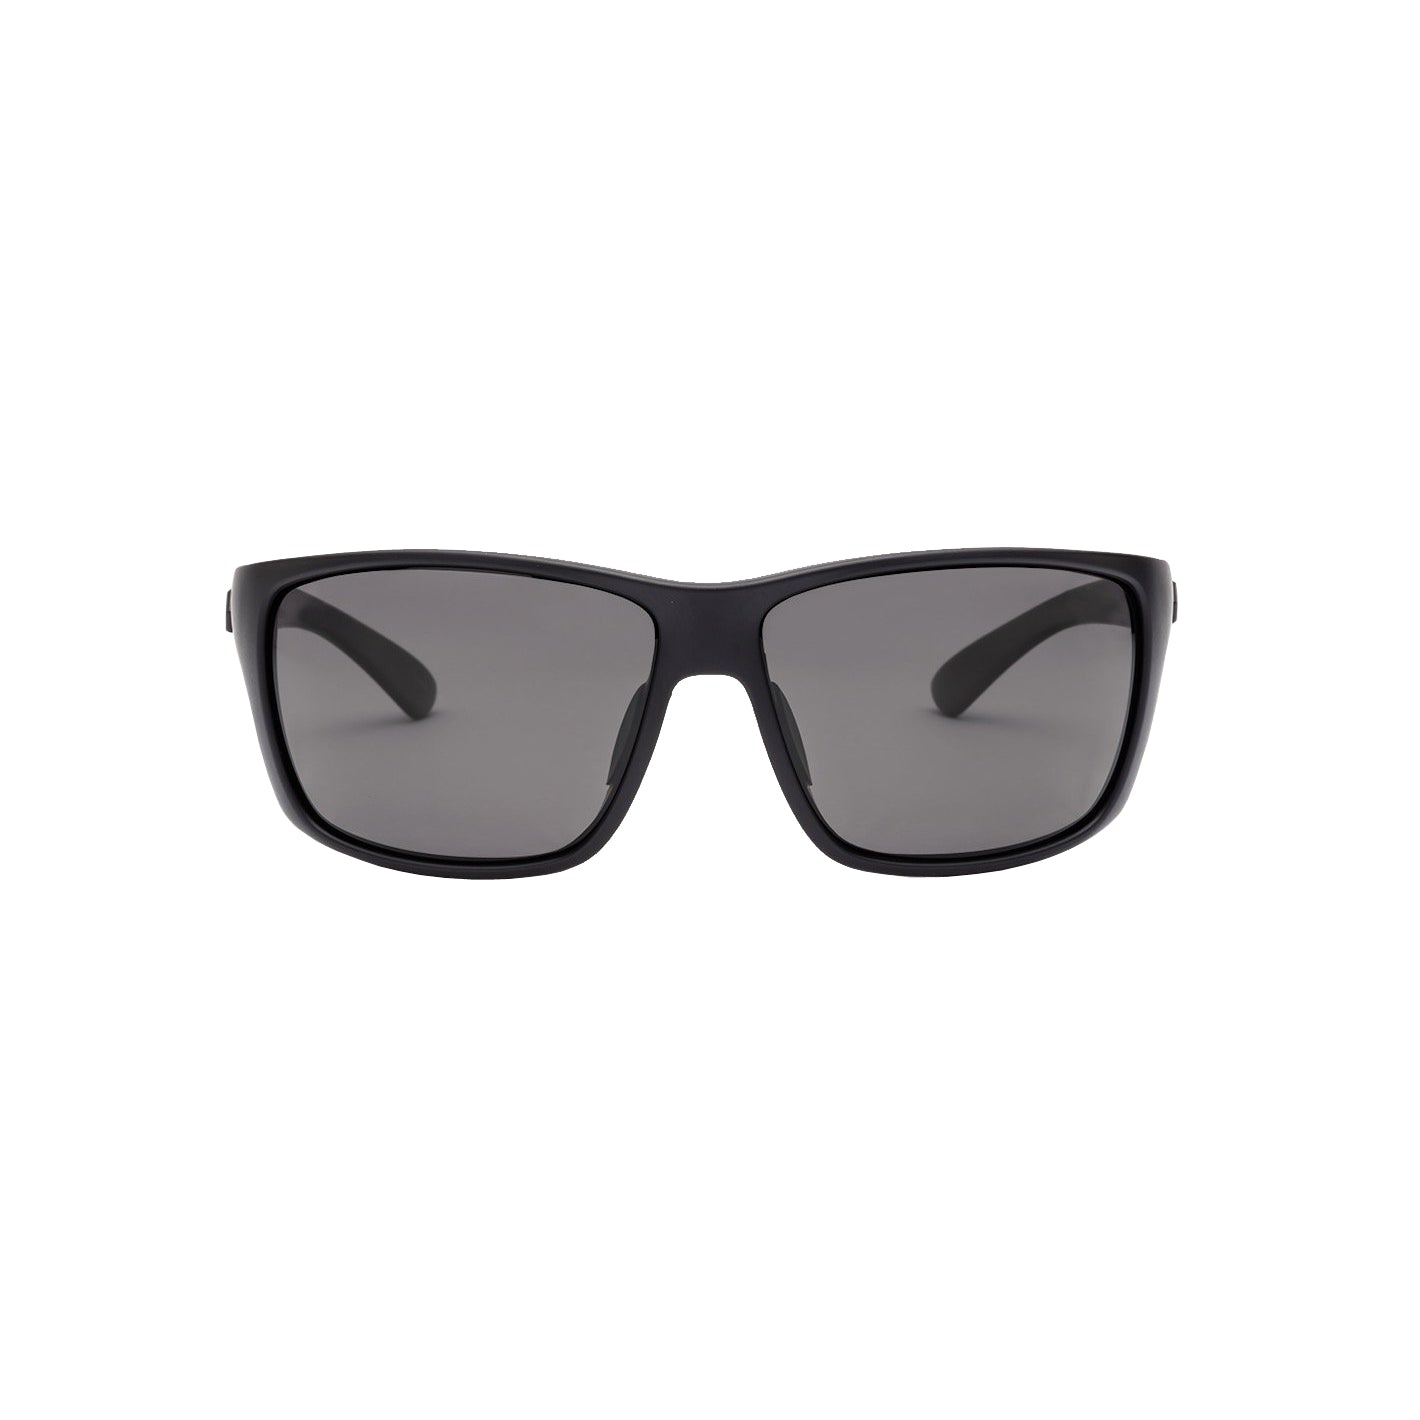 Volcom Roll Sunglasses GlossBlack Gray